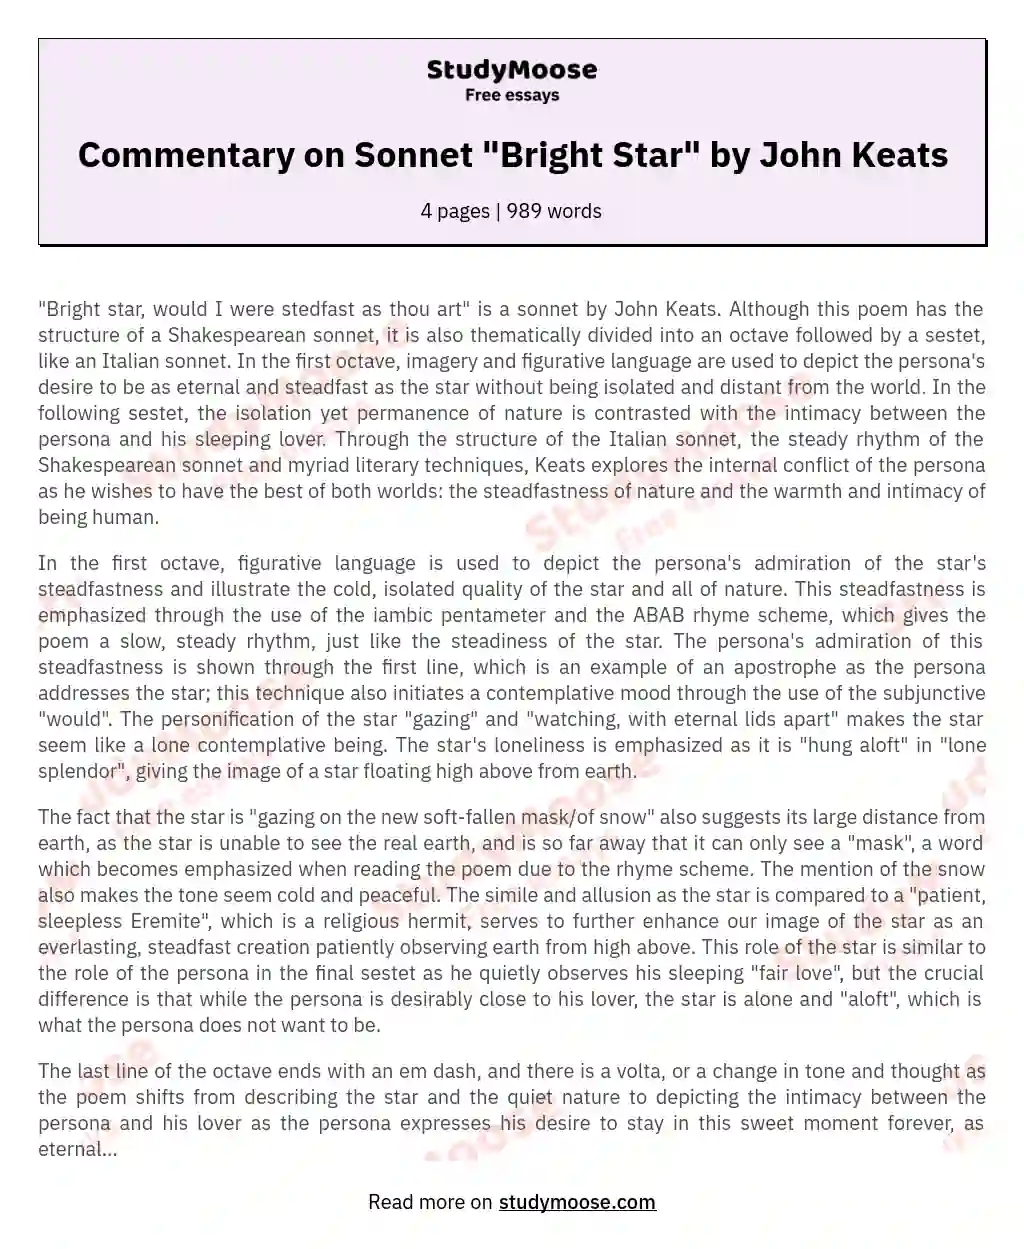 Commentary on Sonnet "Bright Star" by John Keats